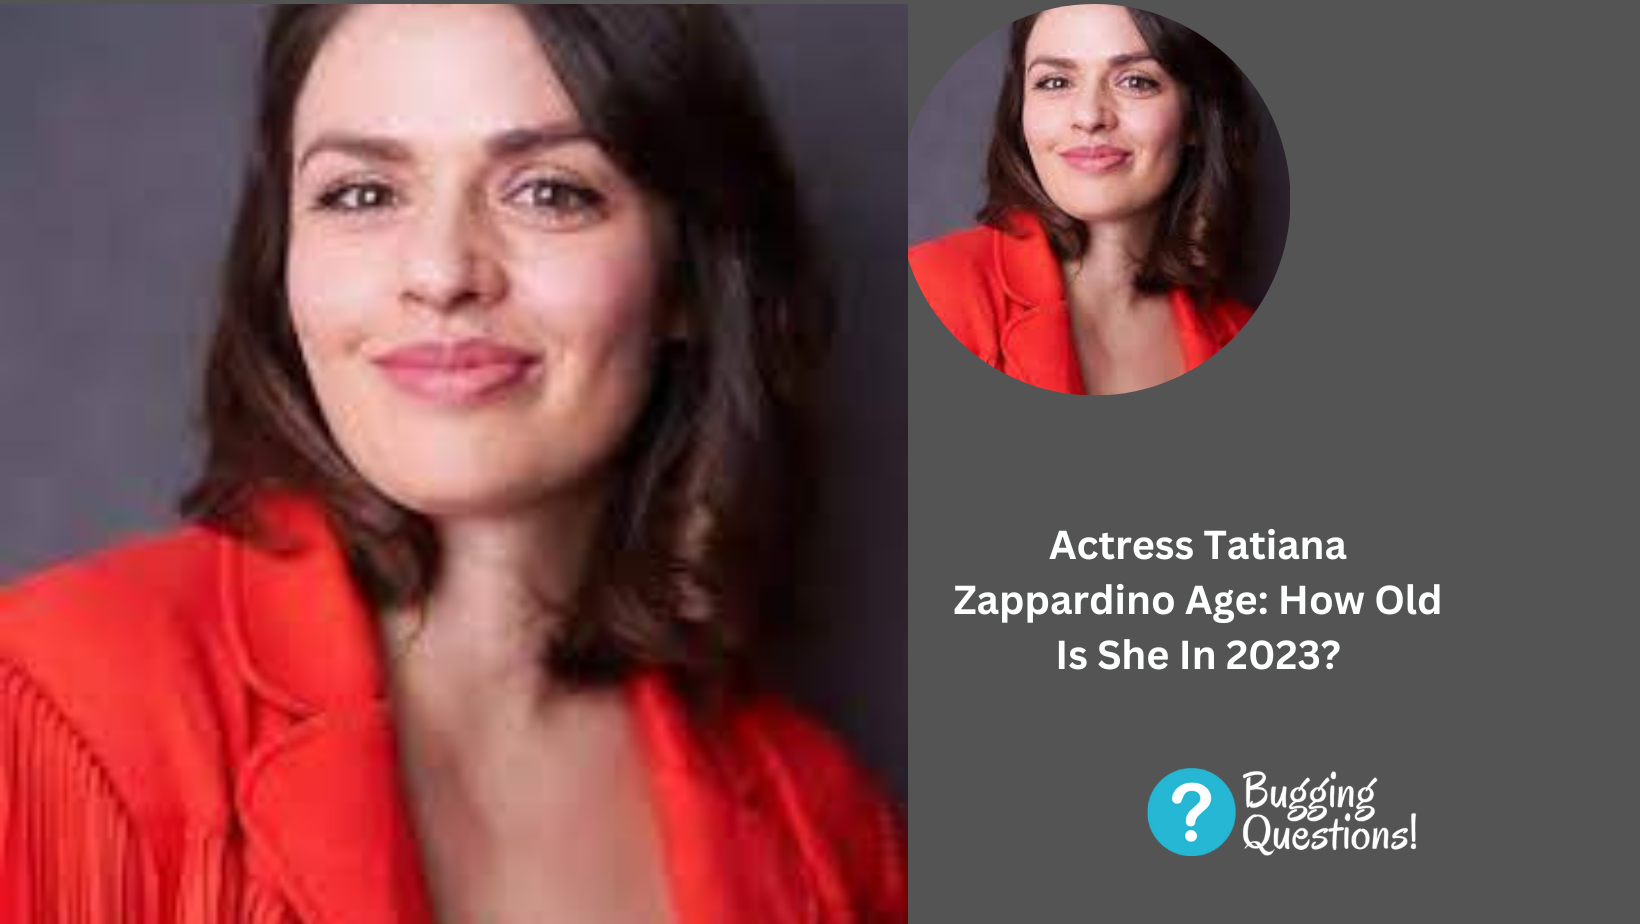 Actress Tatiana Zappardino Age: How Old Is She In 2023?